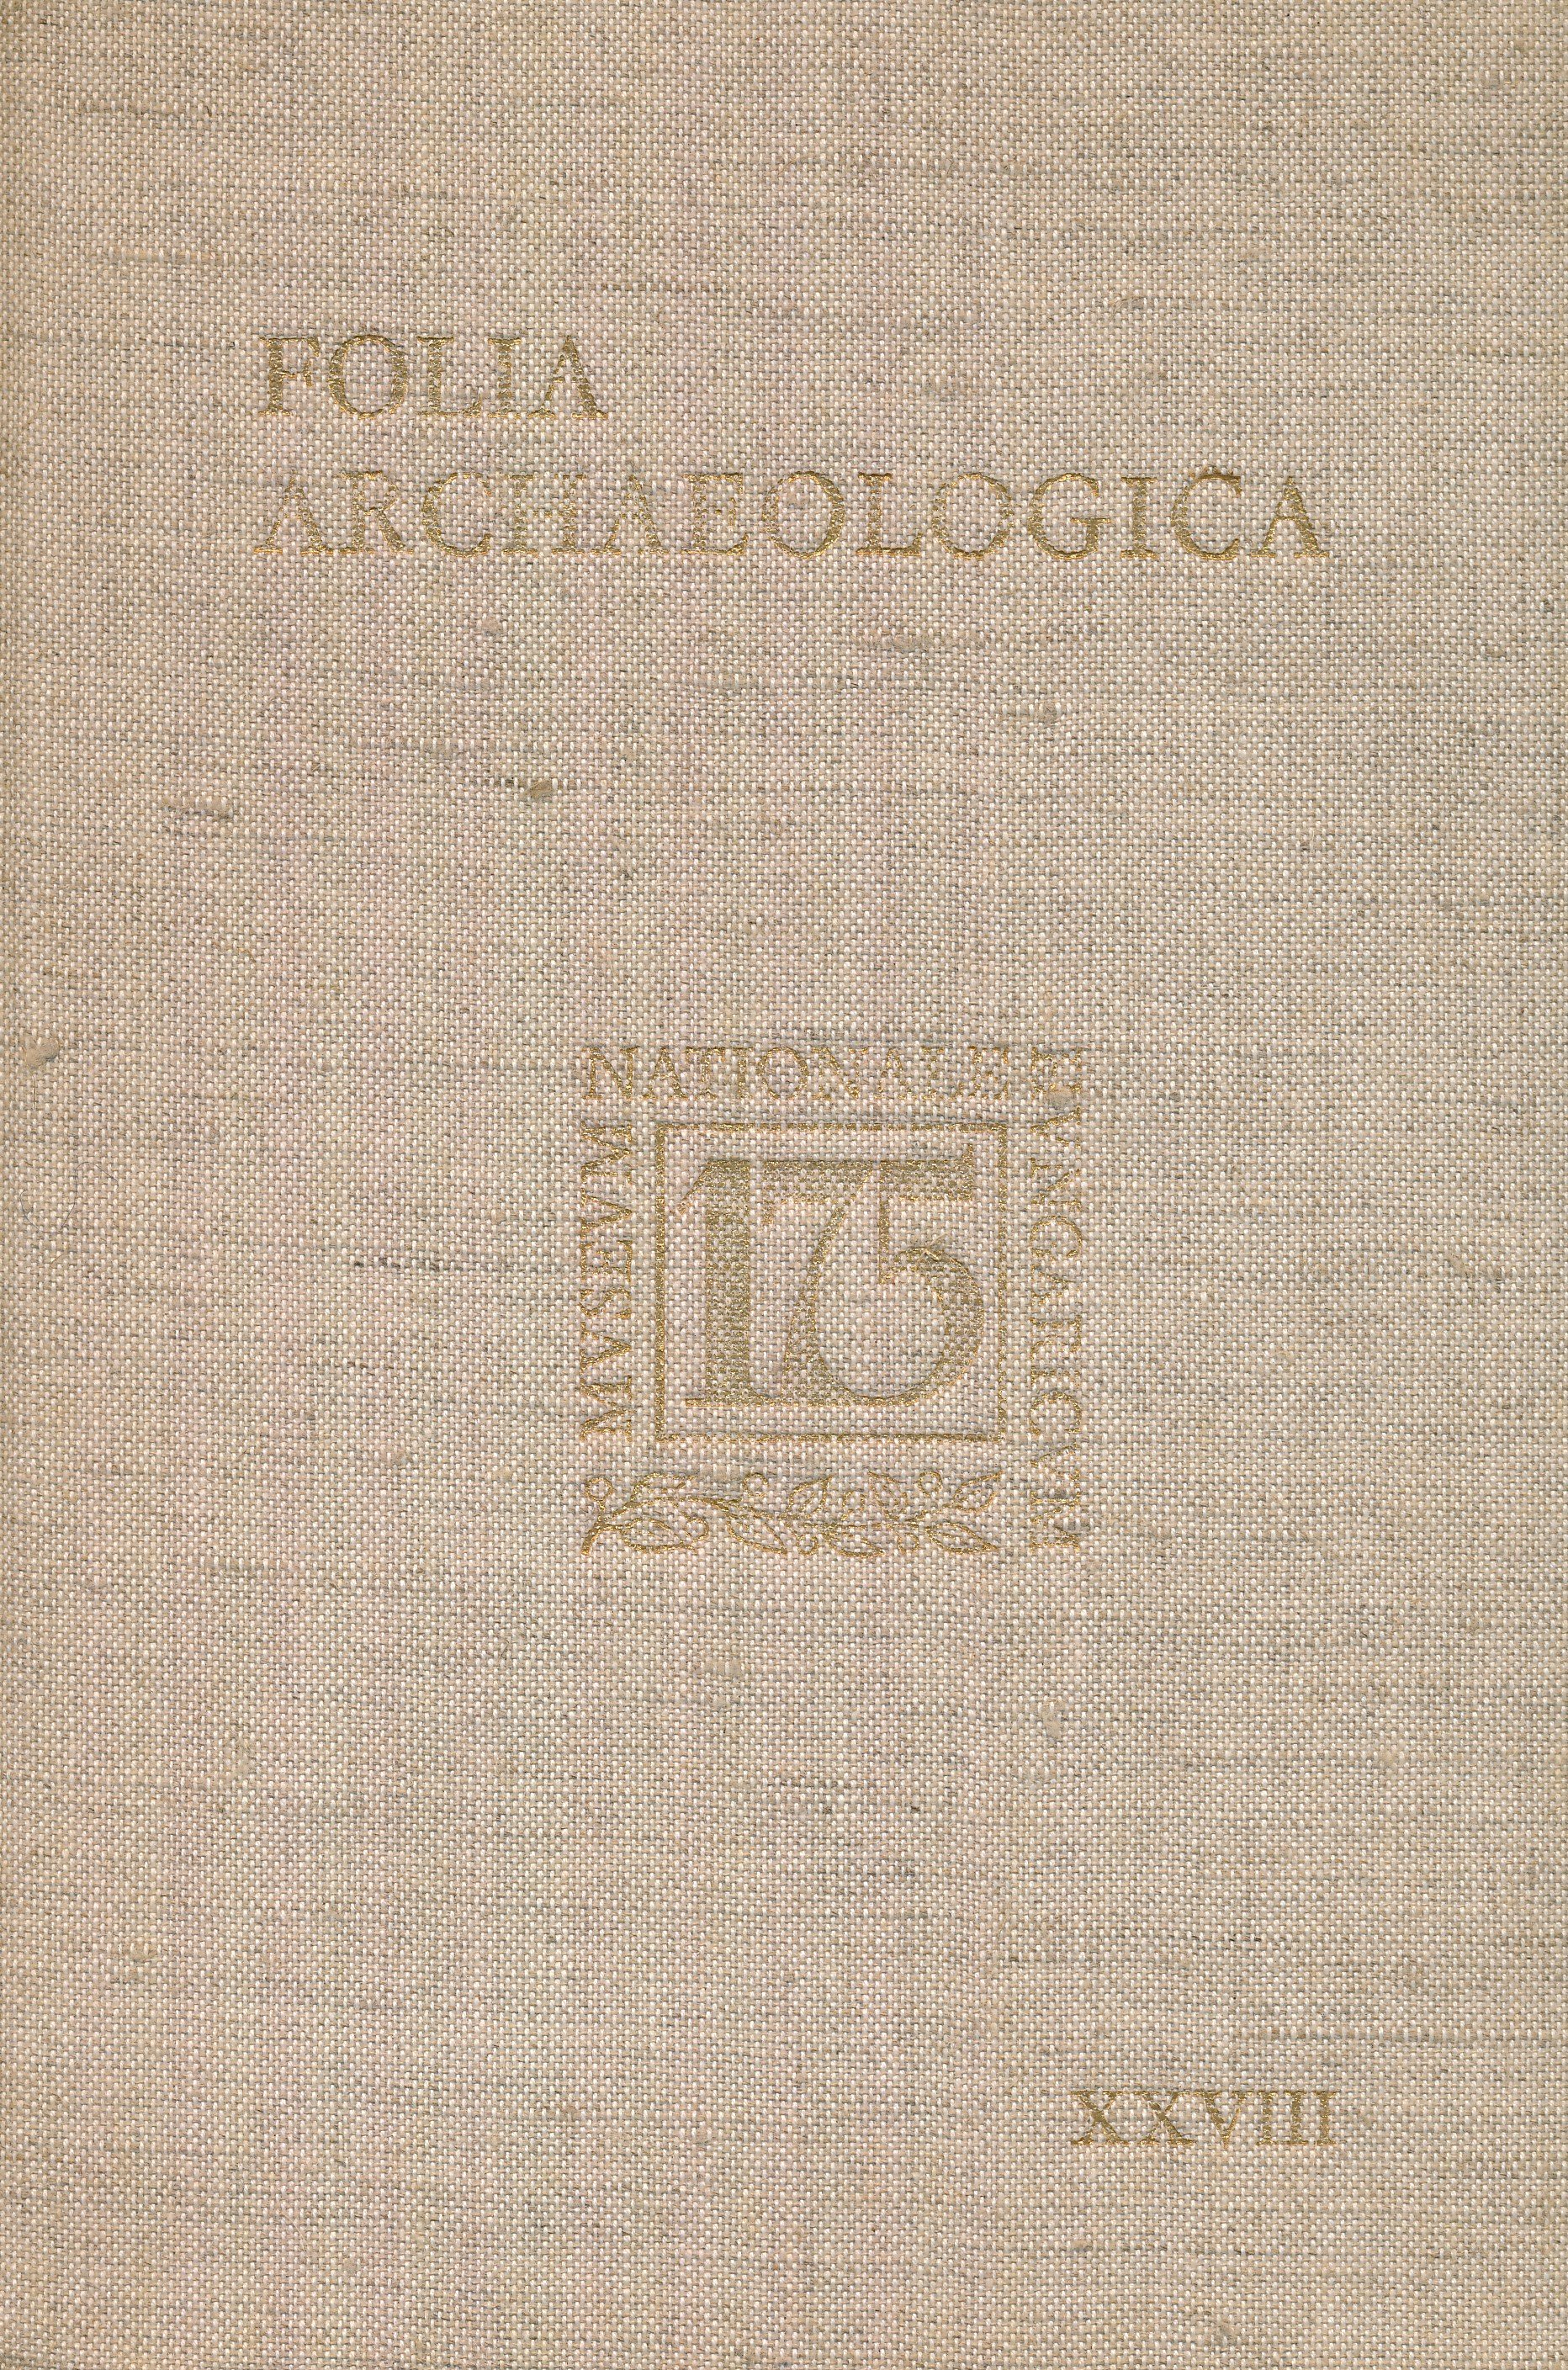 Folia archaeologica XXVIII. (Erkel Ferenc Területi Múzeum, Gyula CC BY-NC-SA)